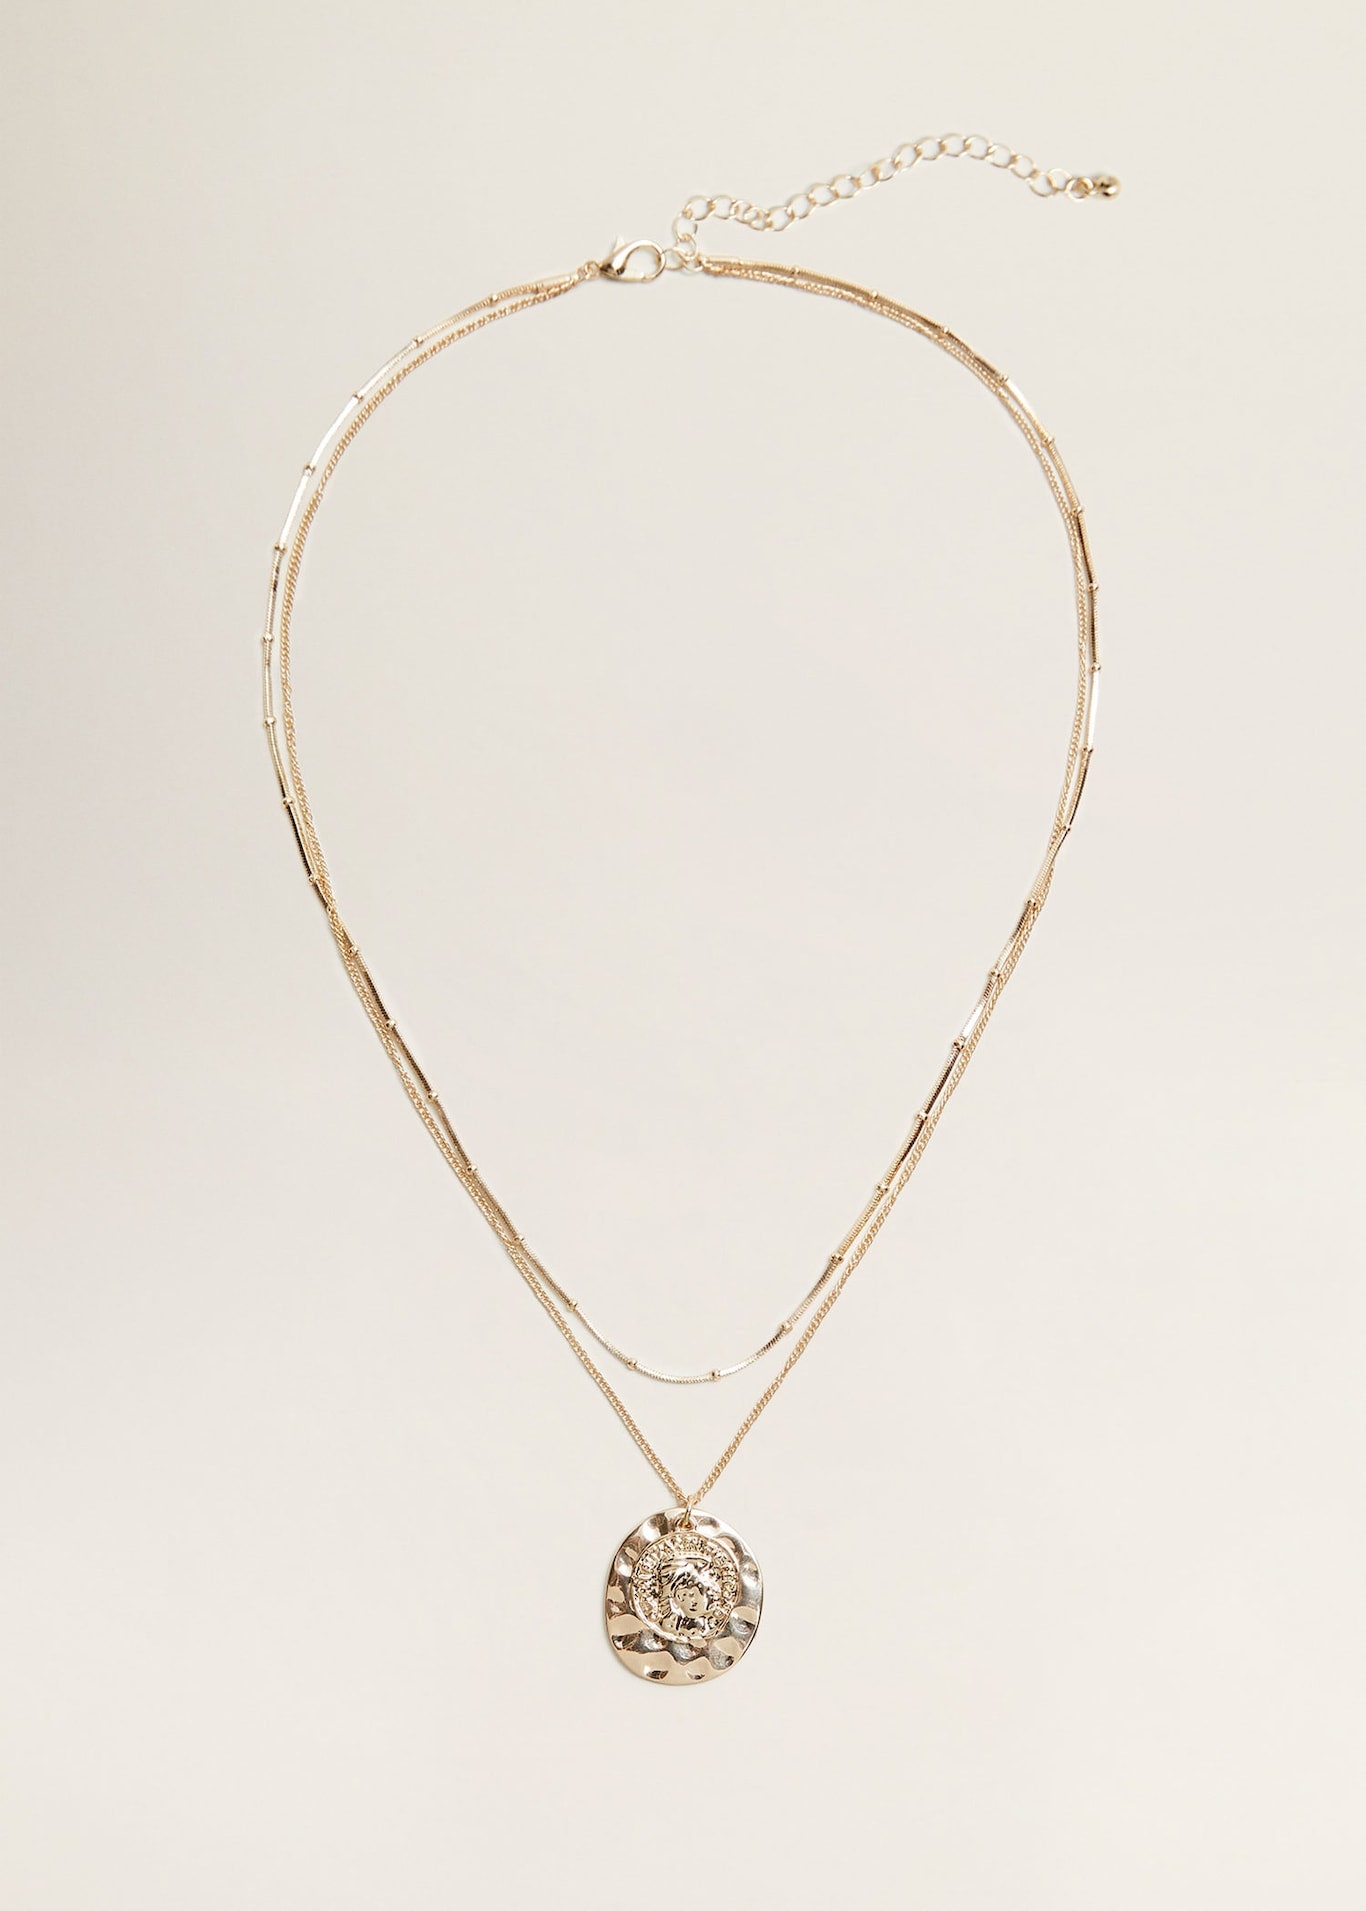 Ожерелье Mango 1499 руб. цена после скидки 1199 руб.